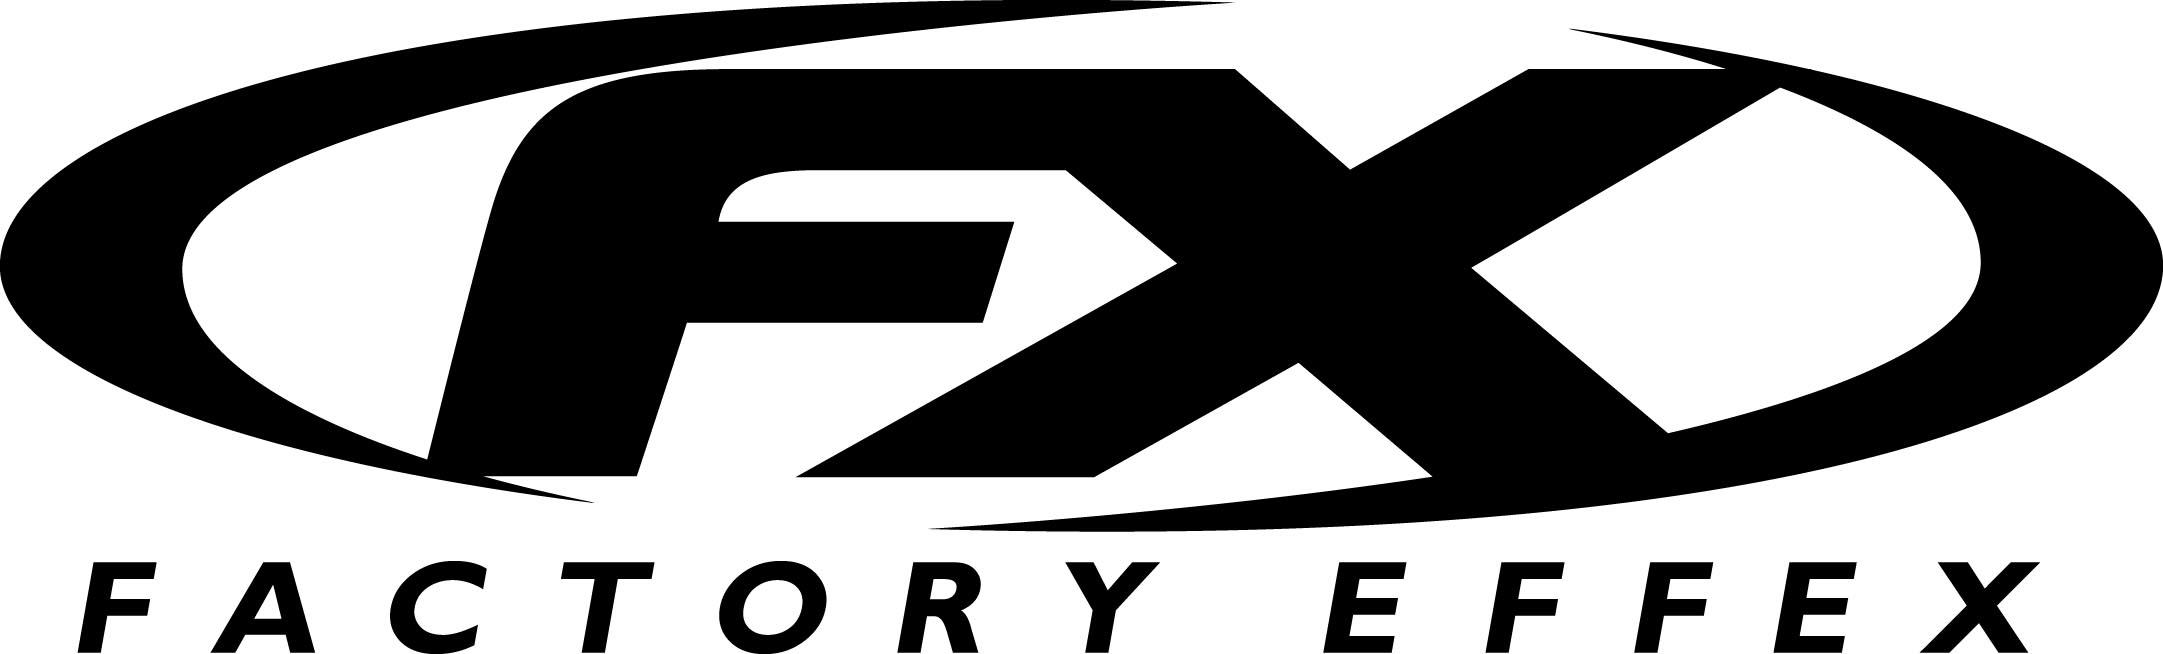 VINYL FX Logo photo - 1